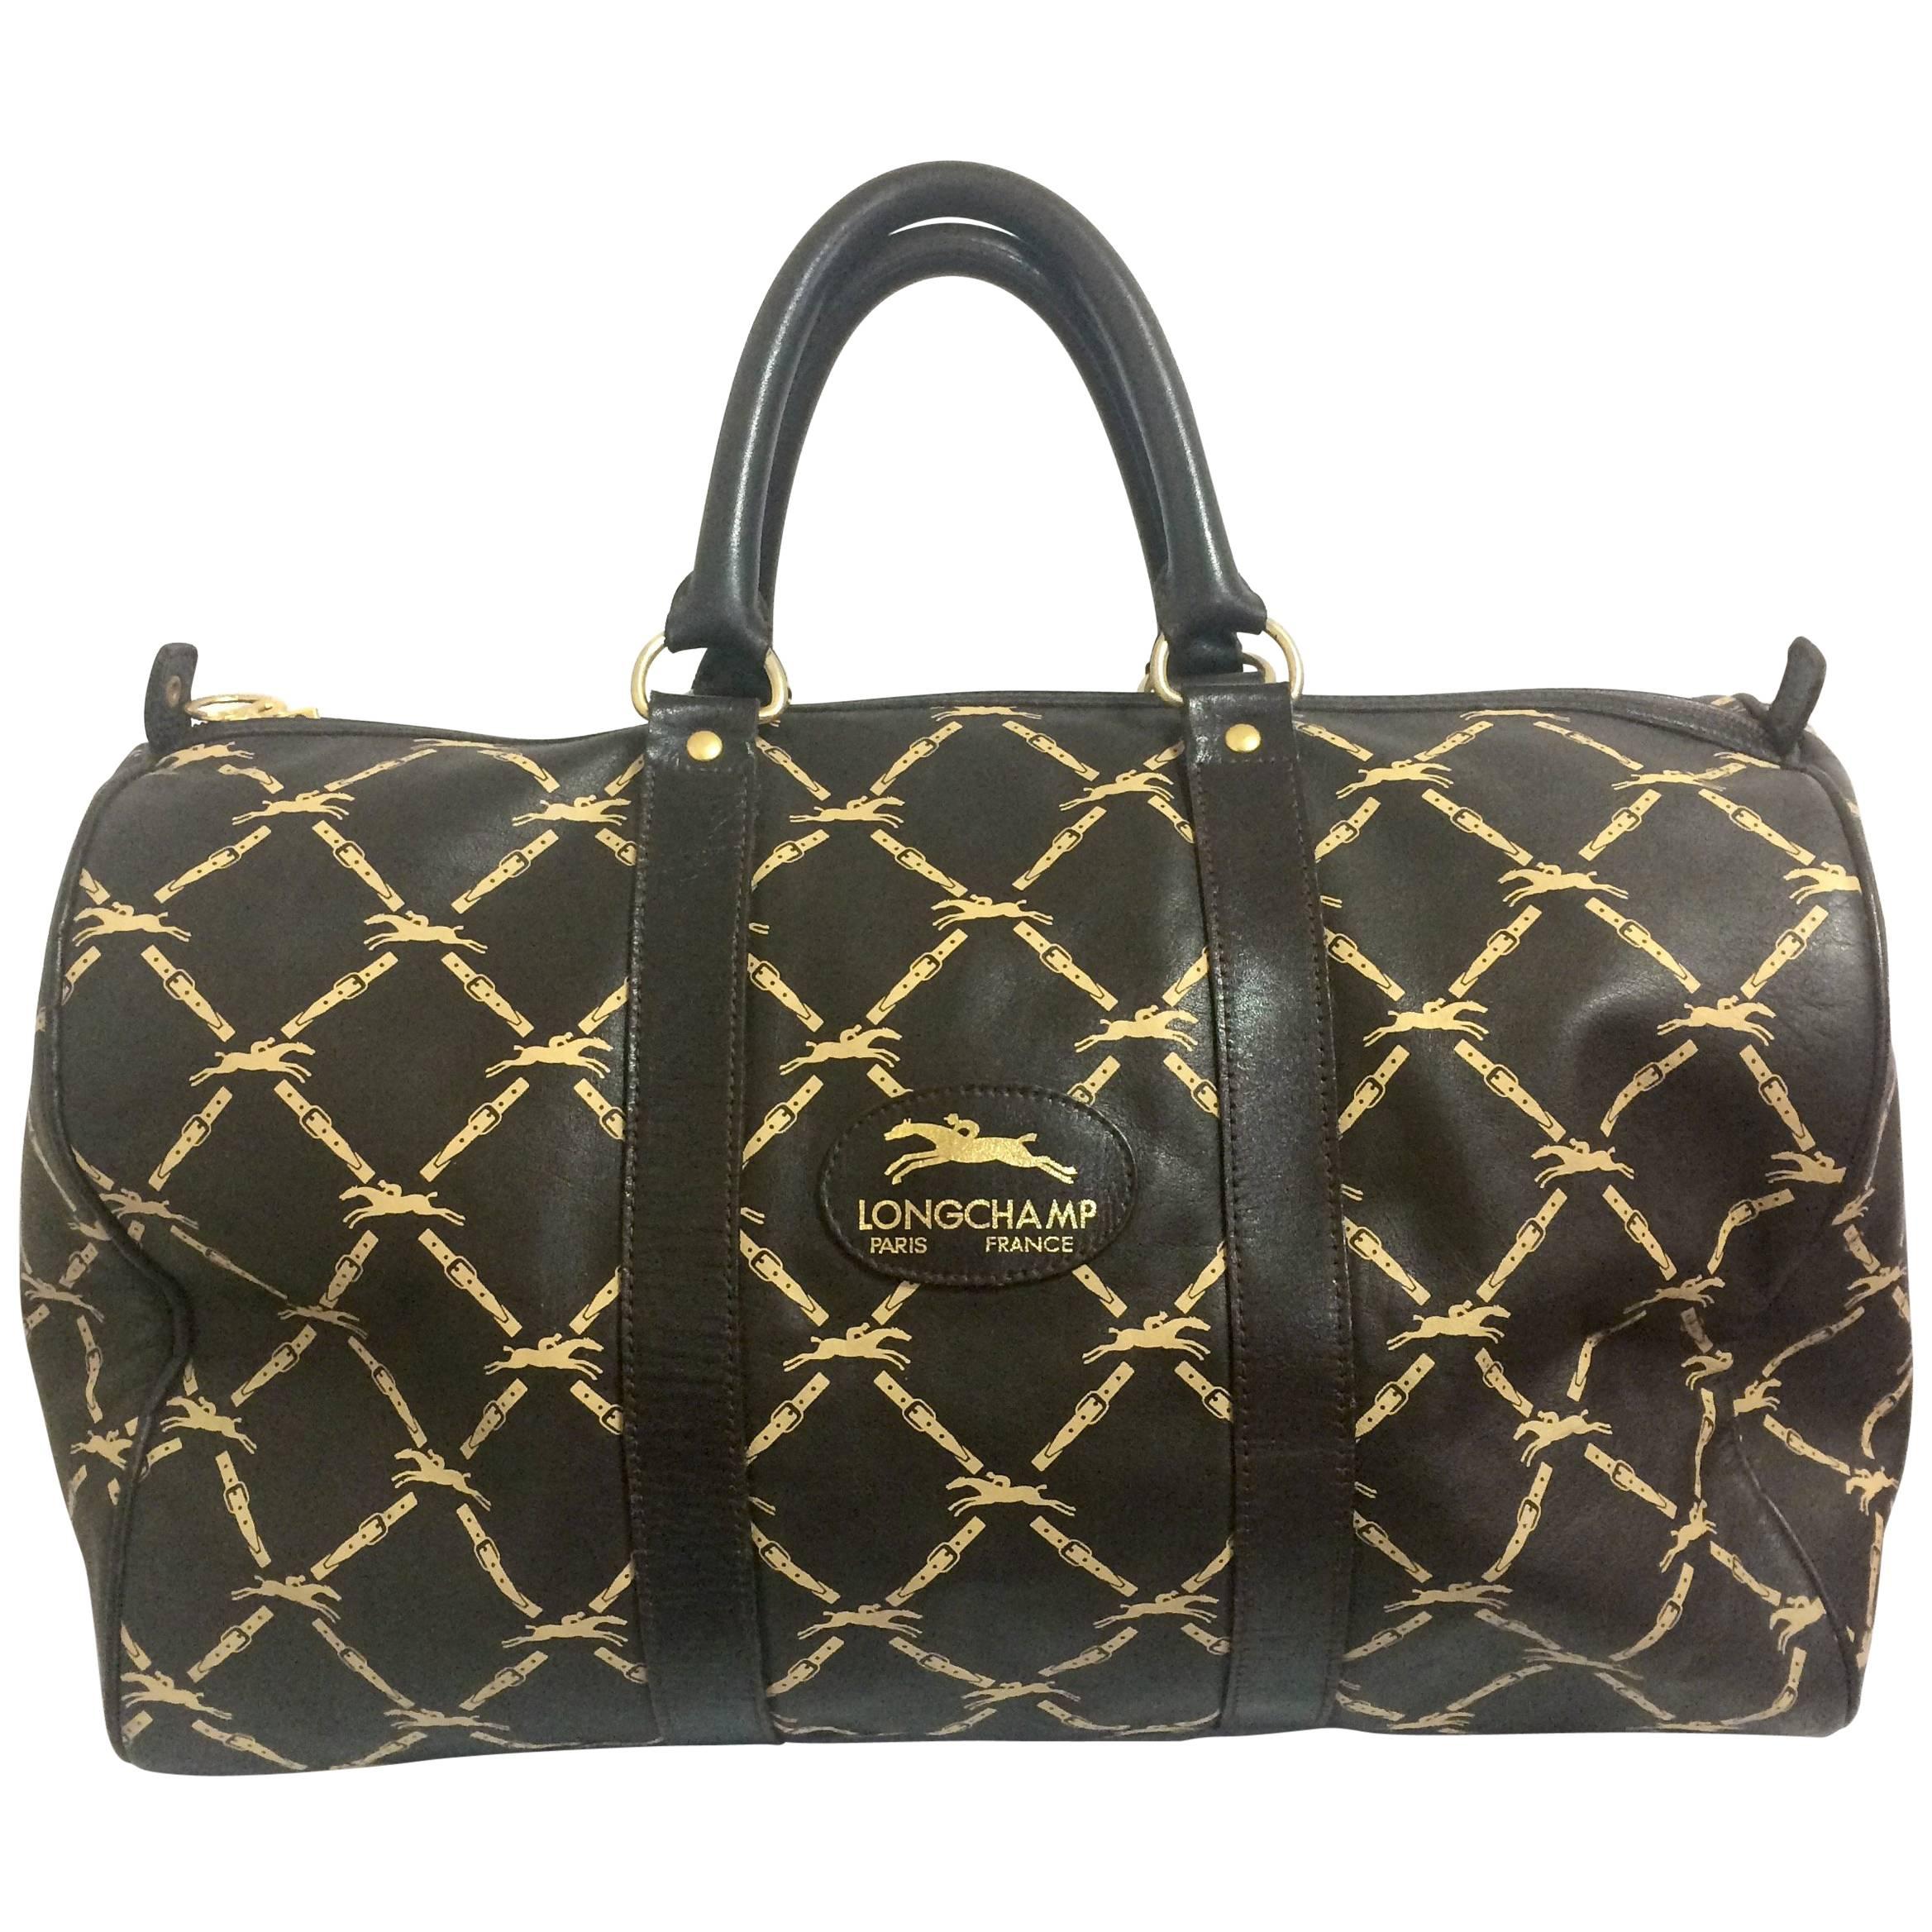 Vintage longchamp leather bag  Longchamp leather bag, Longchamp leather,  Bags